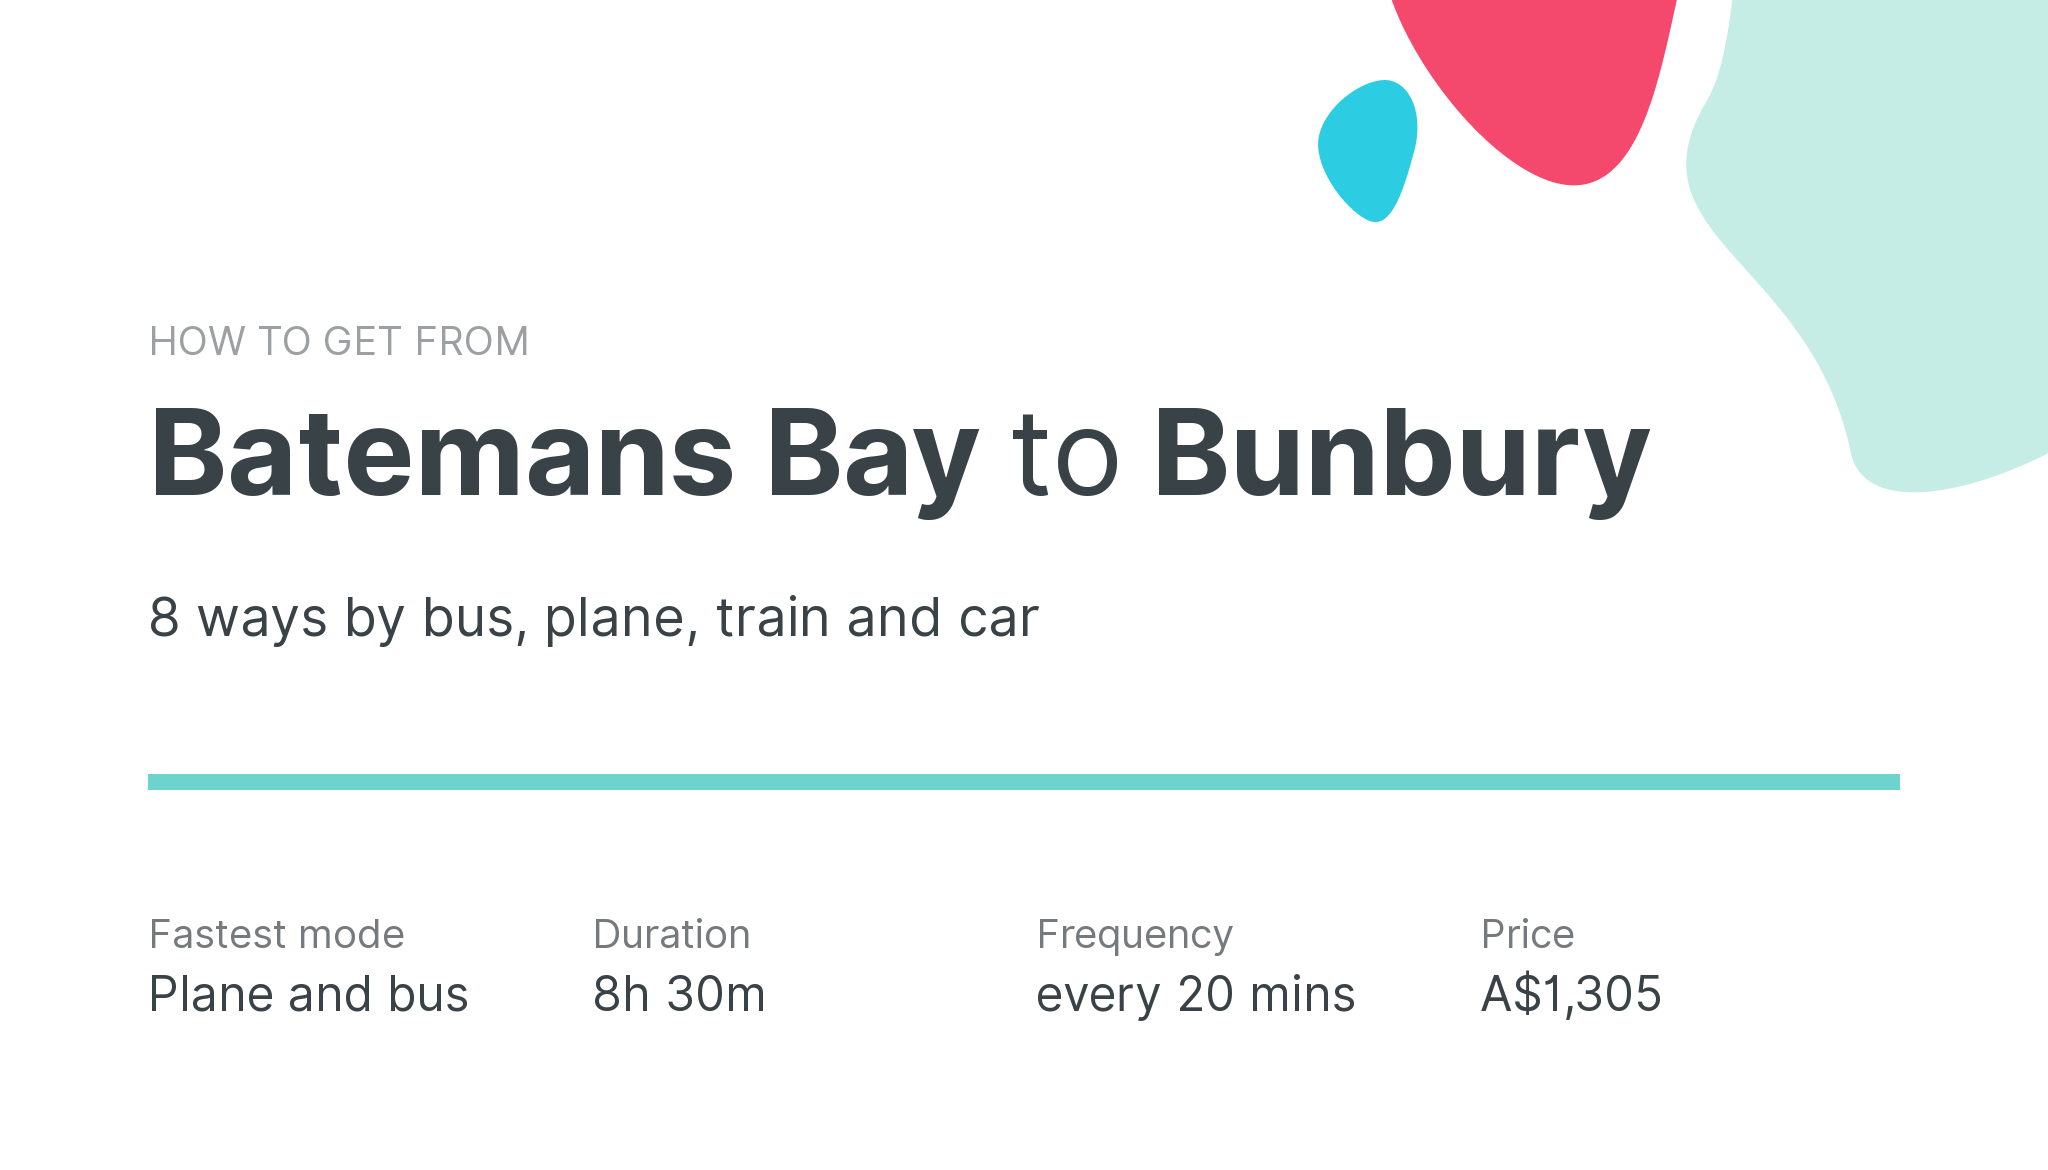 How do I get from Batemans Bay to Bunbury